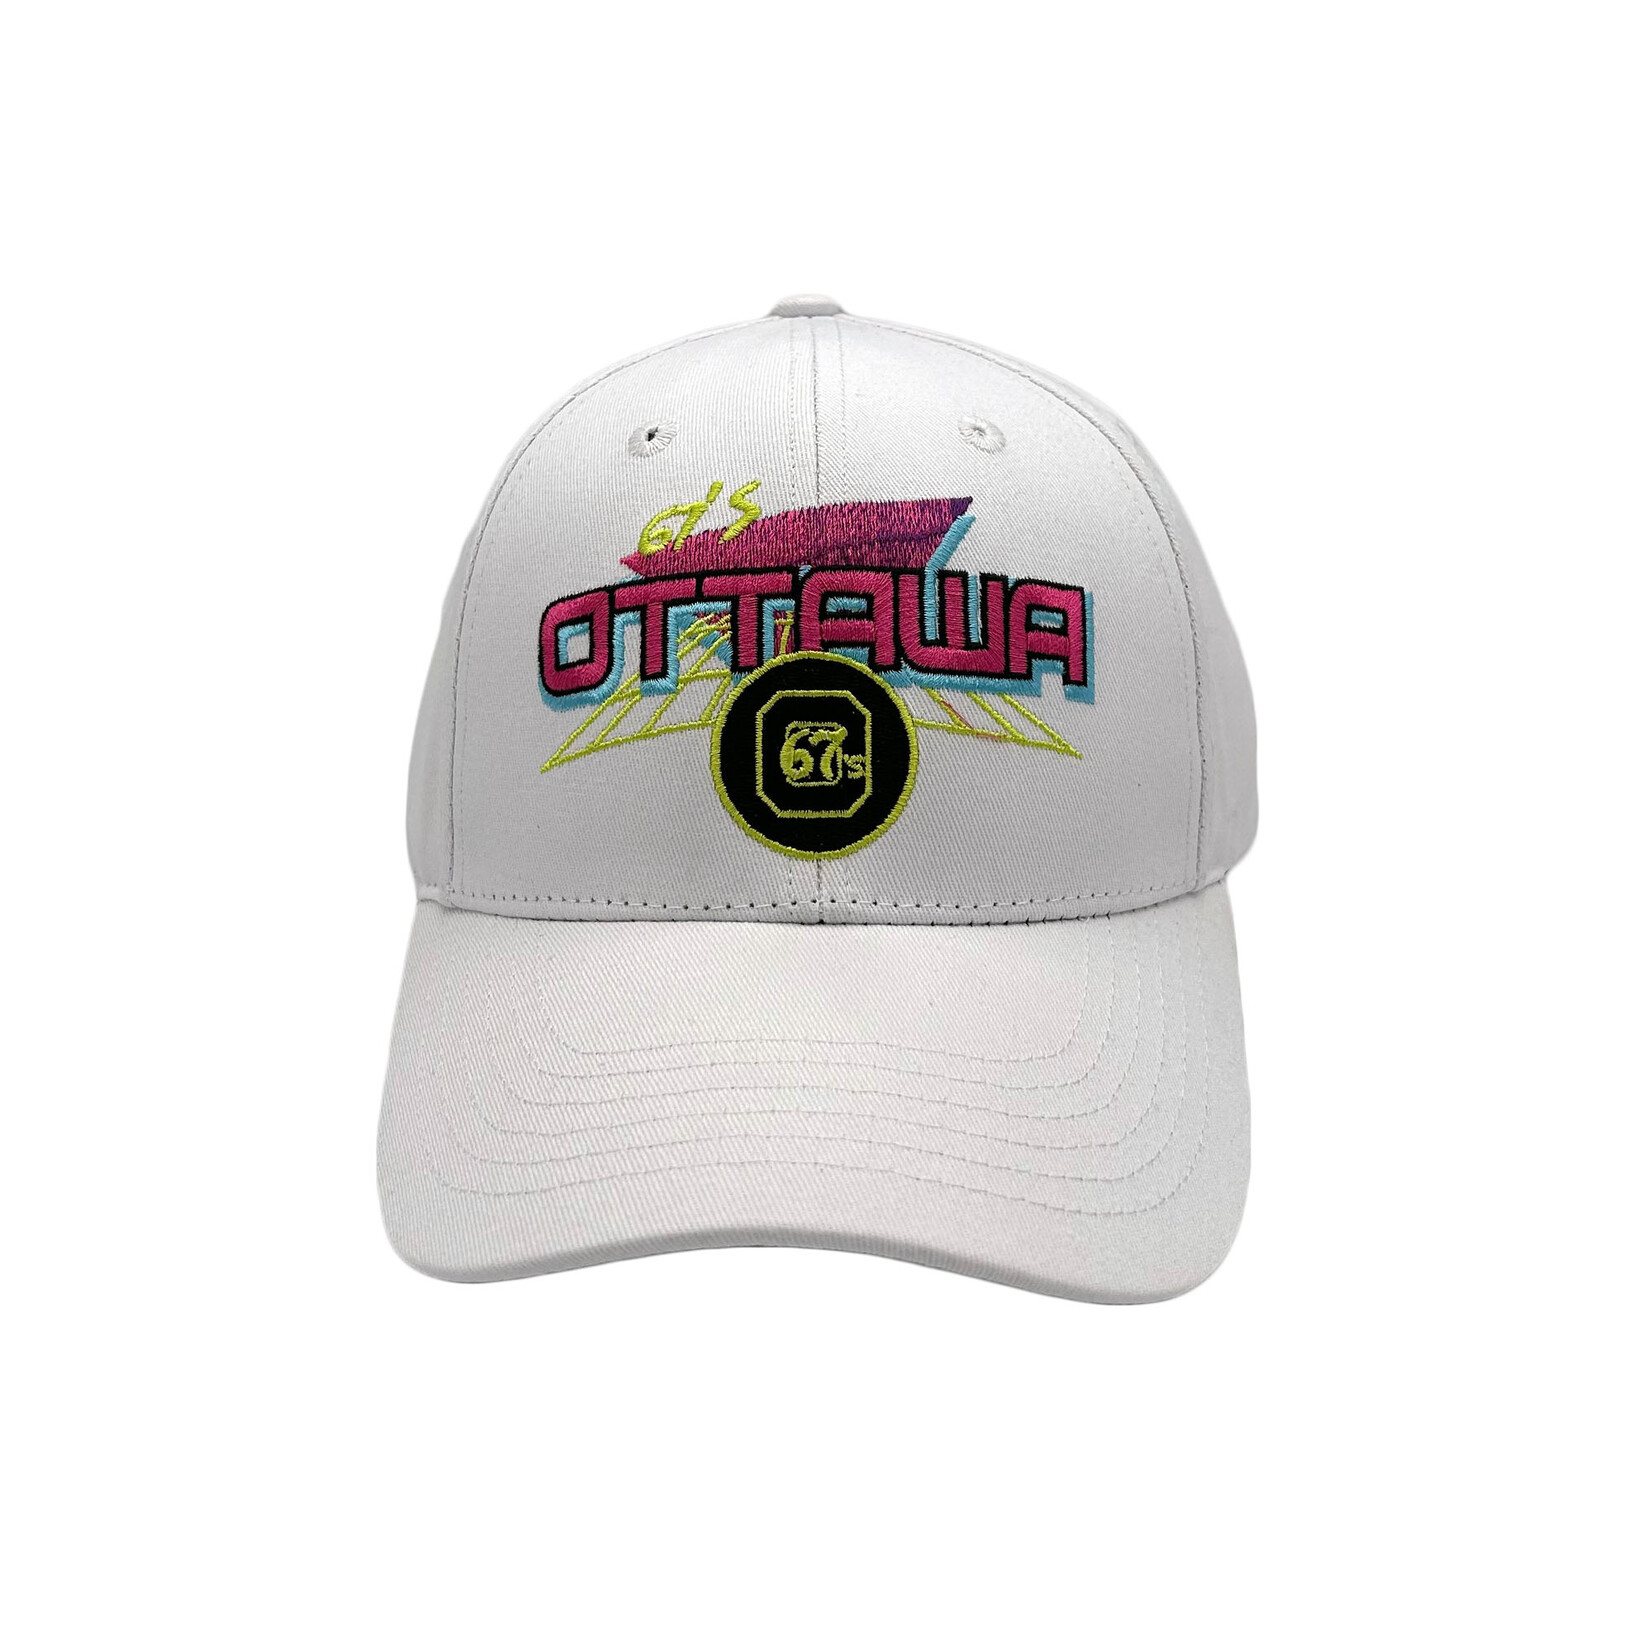 OTTAWA 67's 67's Vice Hat